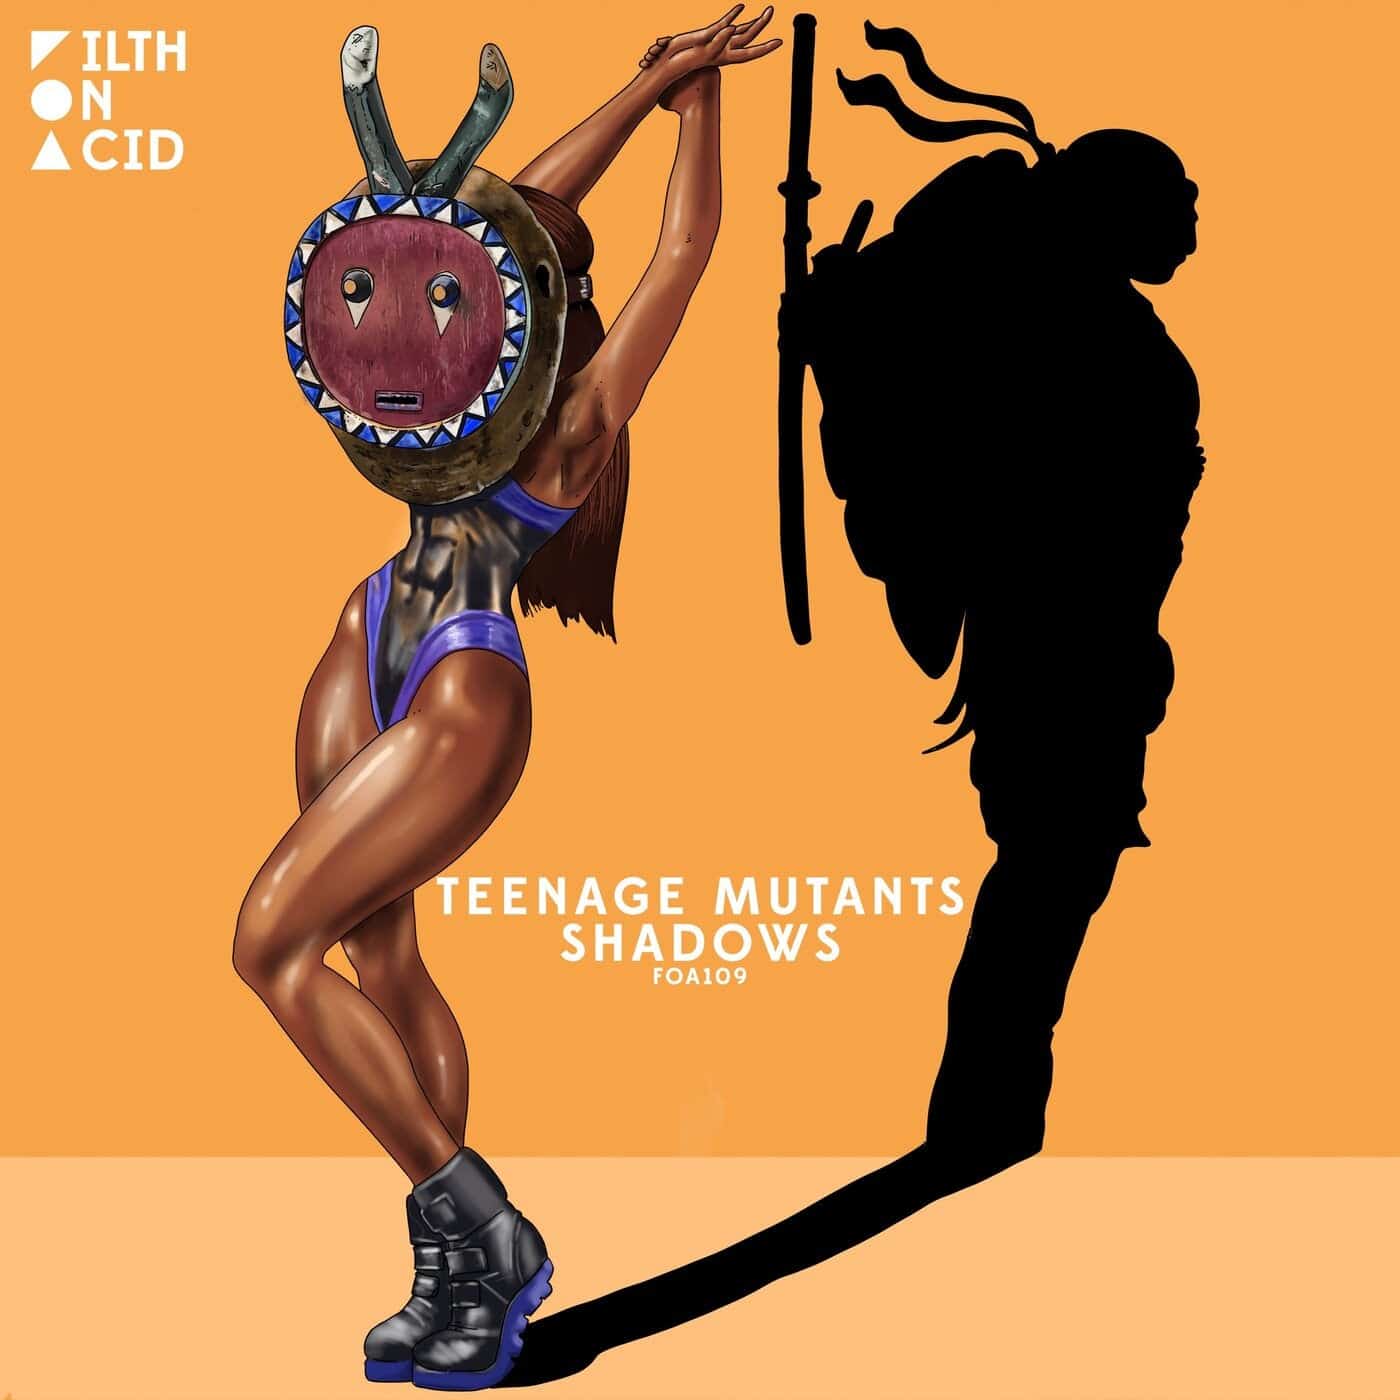 image cover: Teenage Mutants, DJ AroZe - Shadows / FOA109